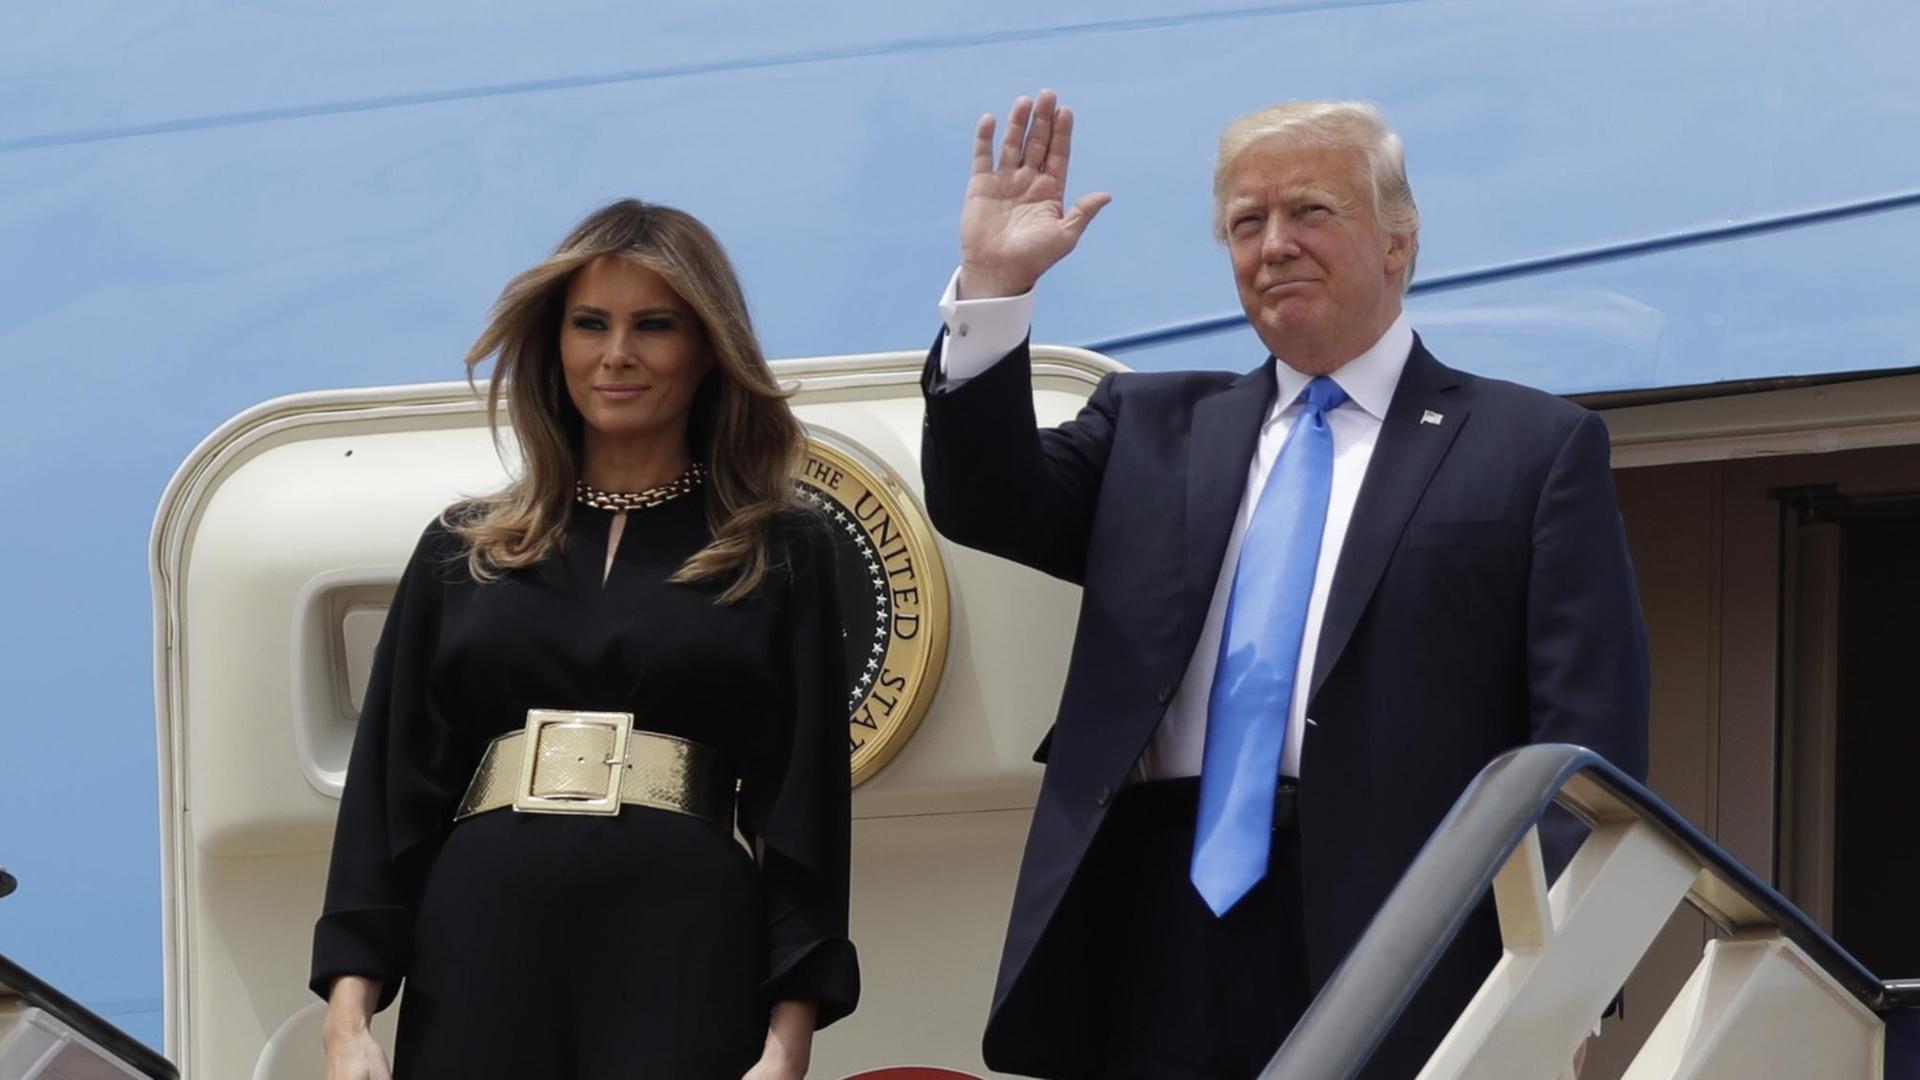 US-Präsident Donald Trump und First Lady Melania Trump verlassen am 20.05.2017 am King Khalid International Airport in Riad (Saudi-Arabien) die Air Force One.